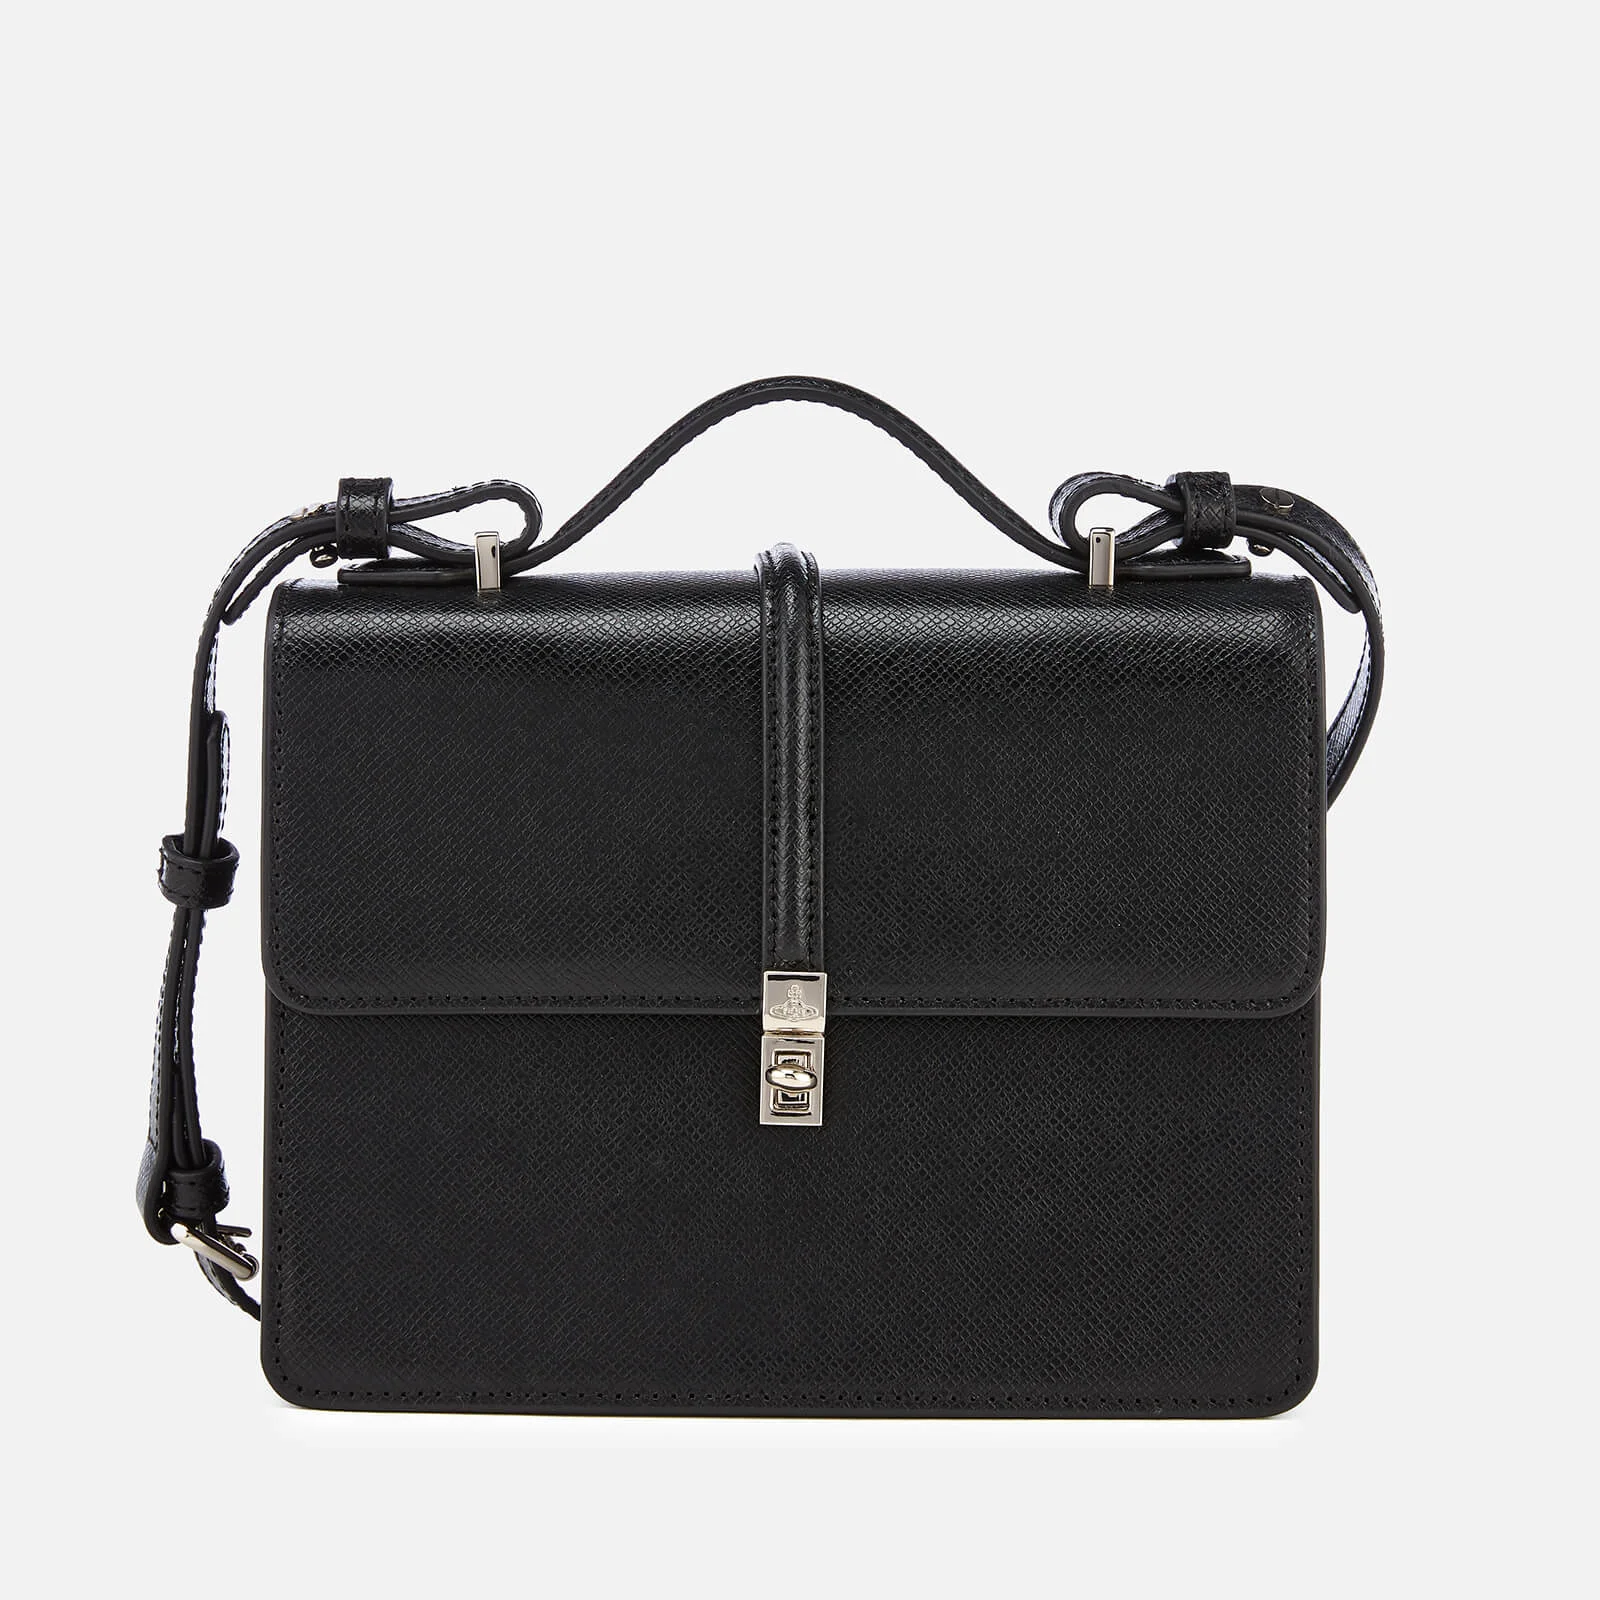 Vivienne Westwood Women's Sofia Medium Shoulder Bag - Black Image 1